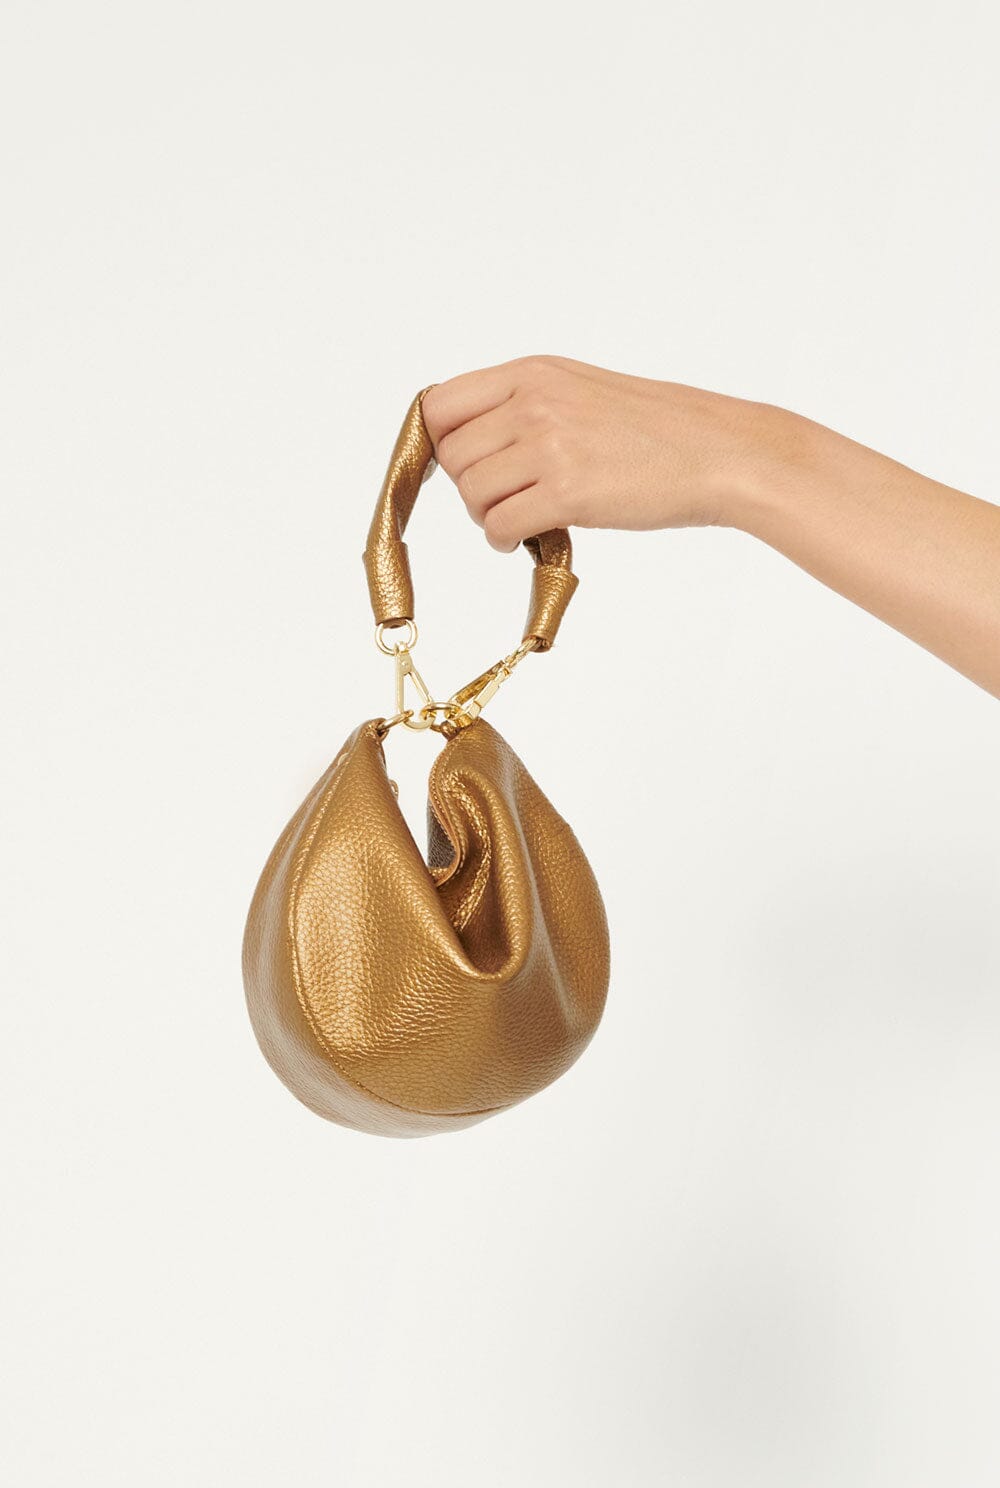 The Baby Gondola Piel Metalizada Oro Hand bags The Bag Lab 